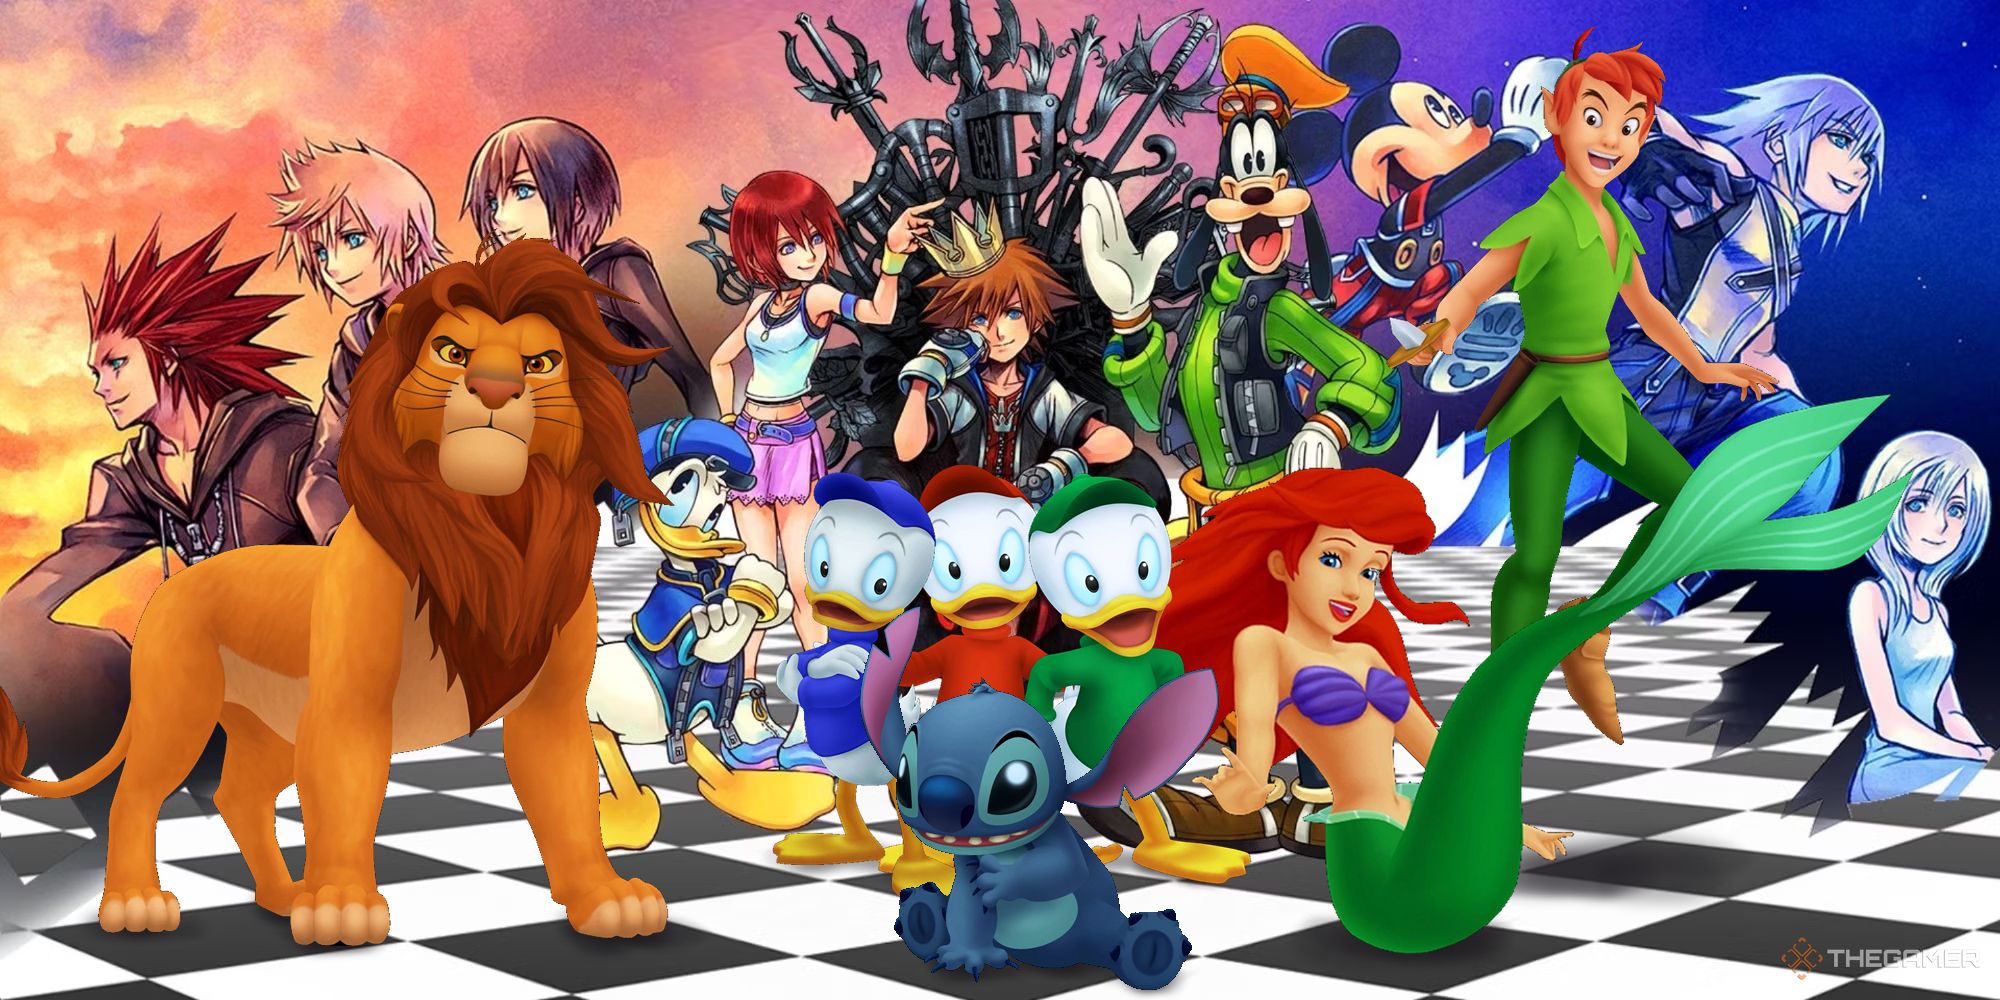 Kingdom Hearts Disney characters